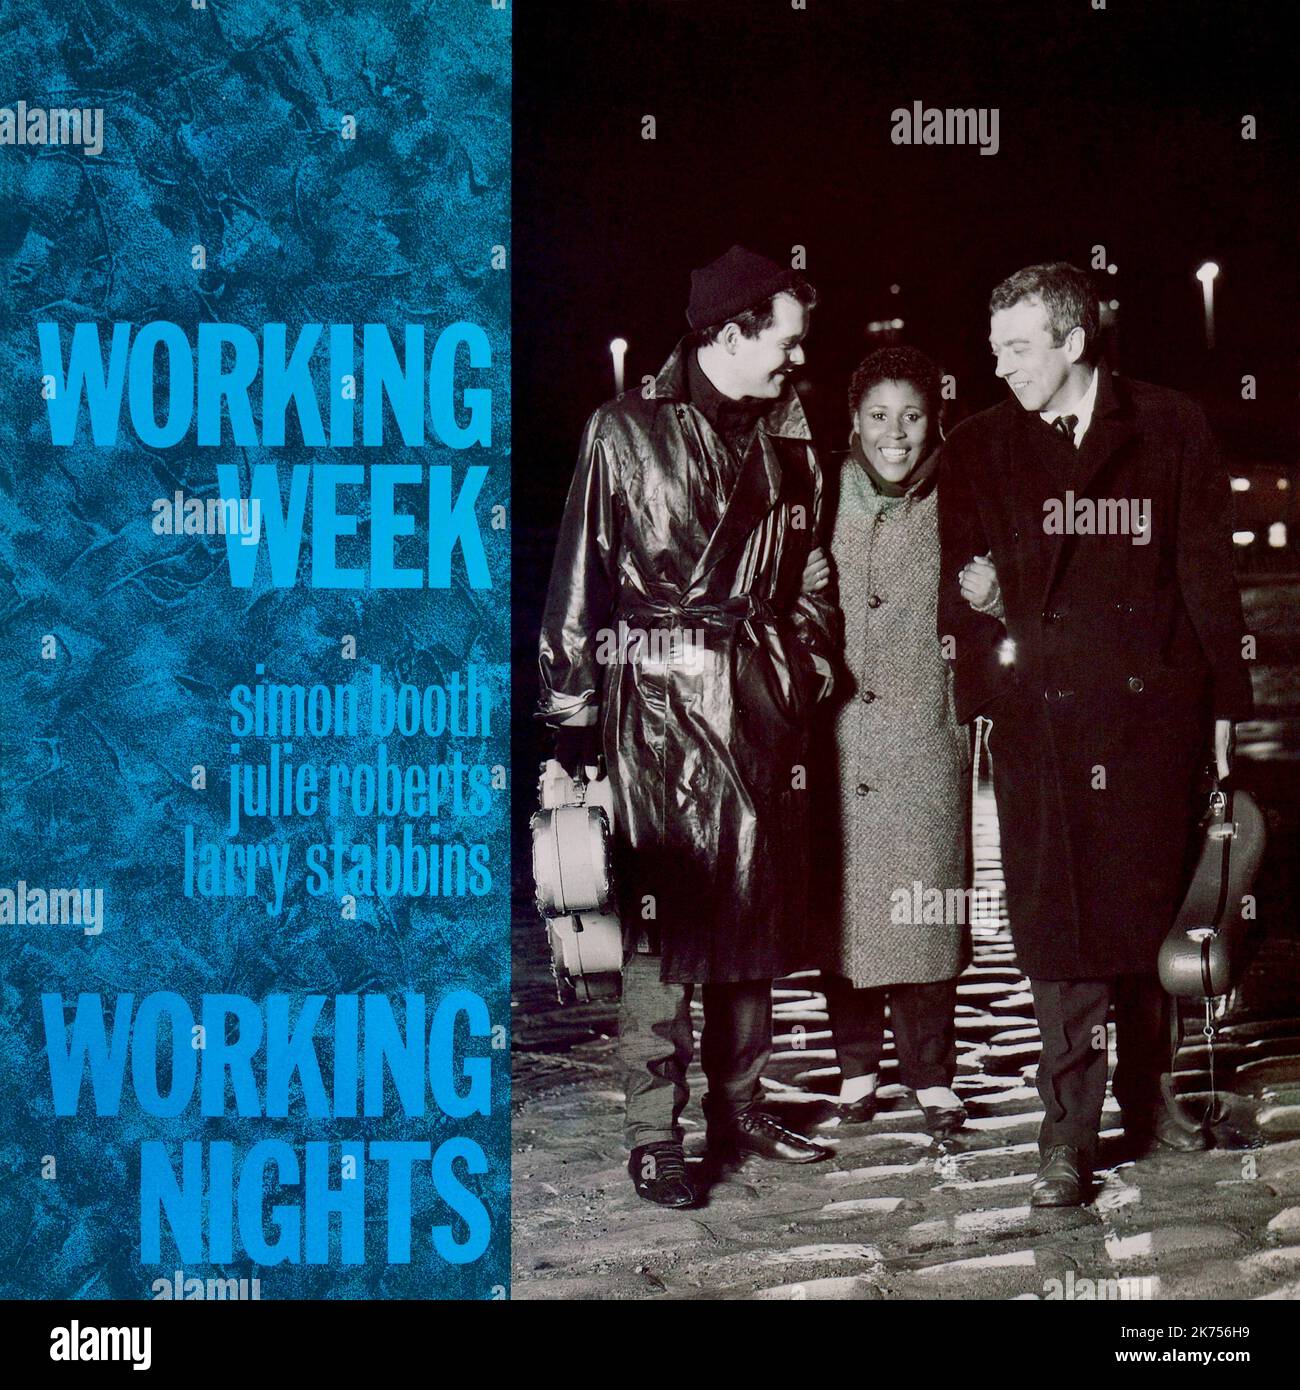 Working Week - original vinyl album cover - Working Nights - 1985 Stock Photo